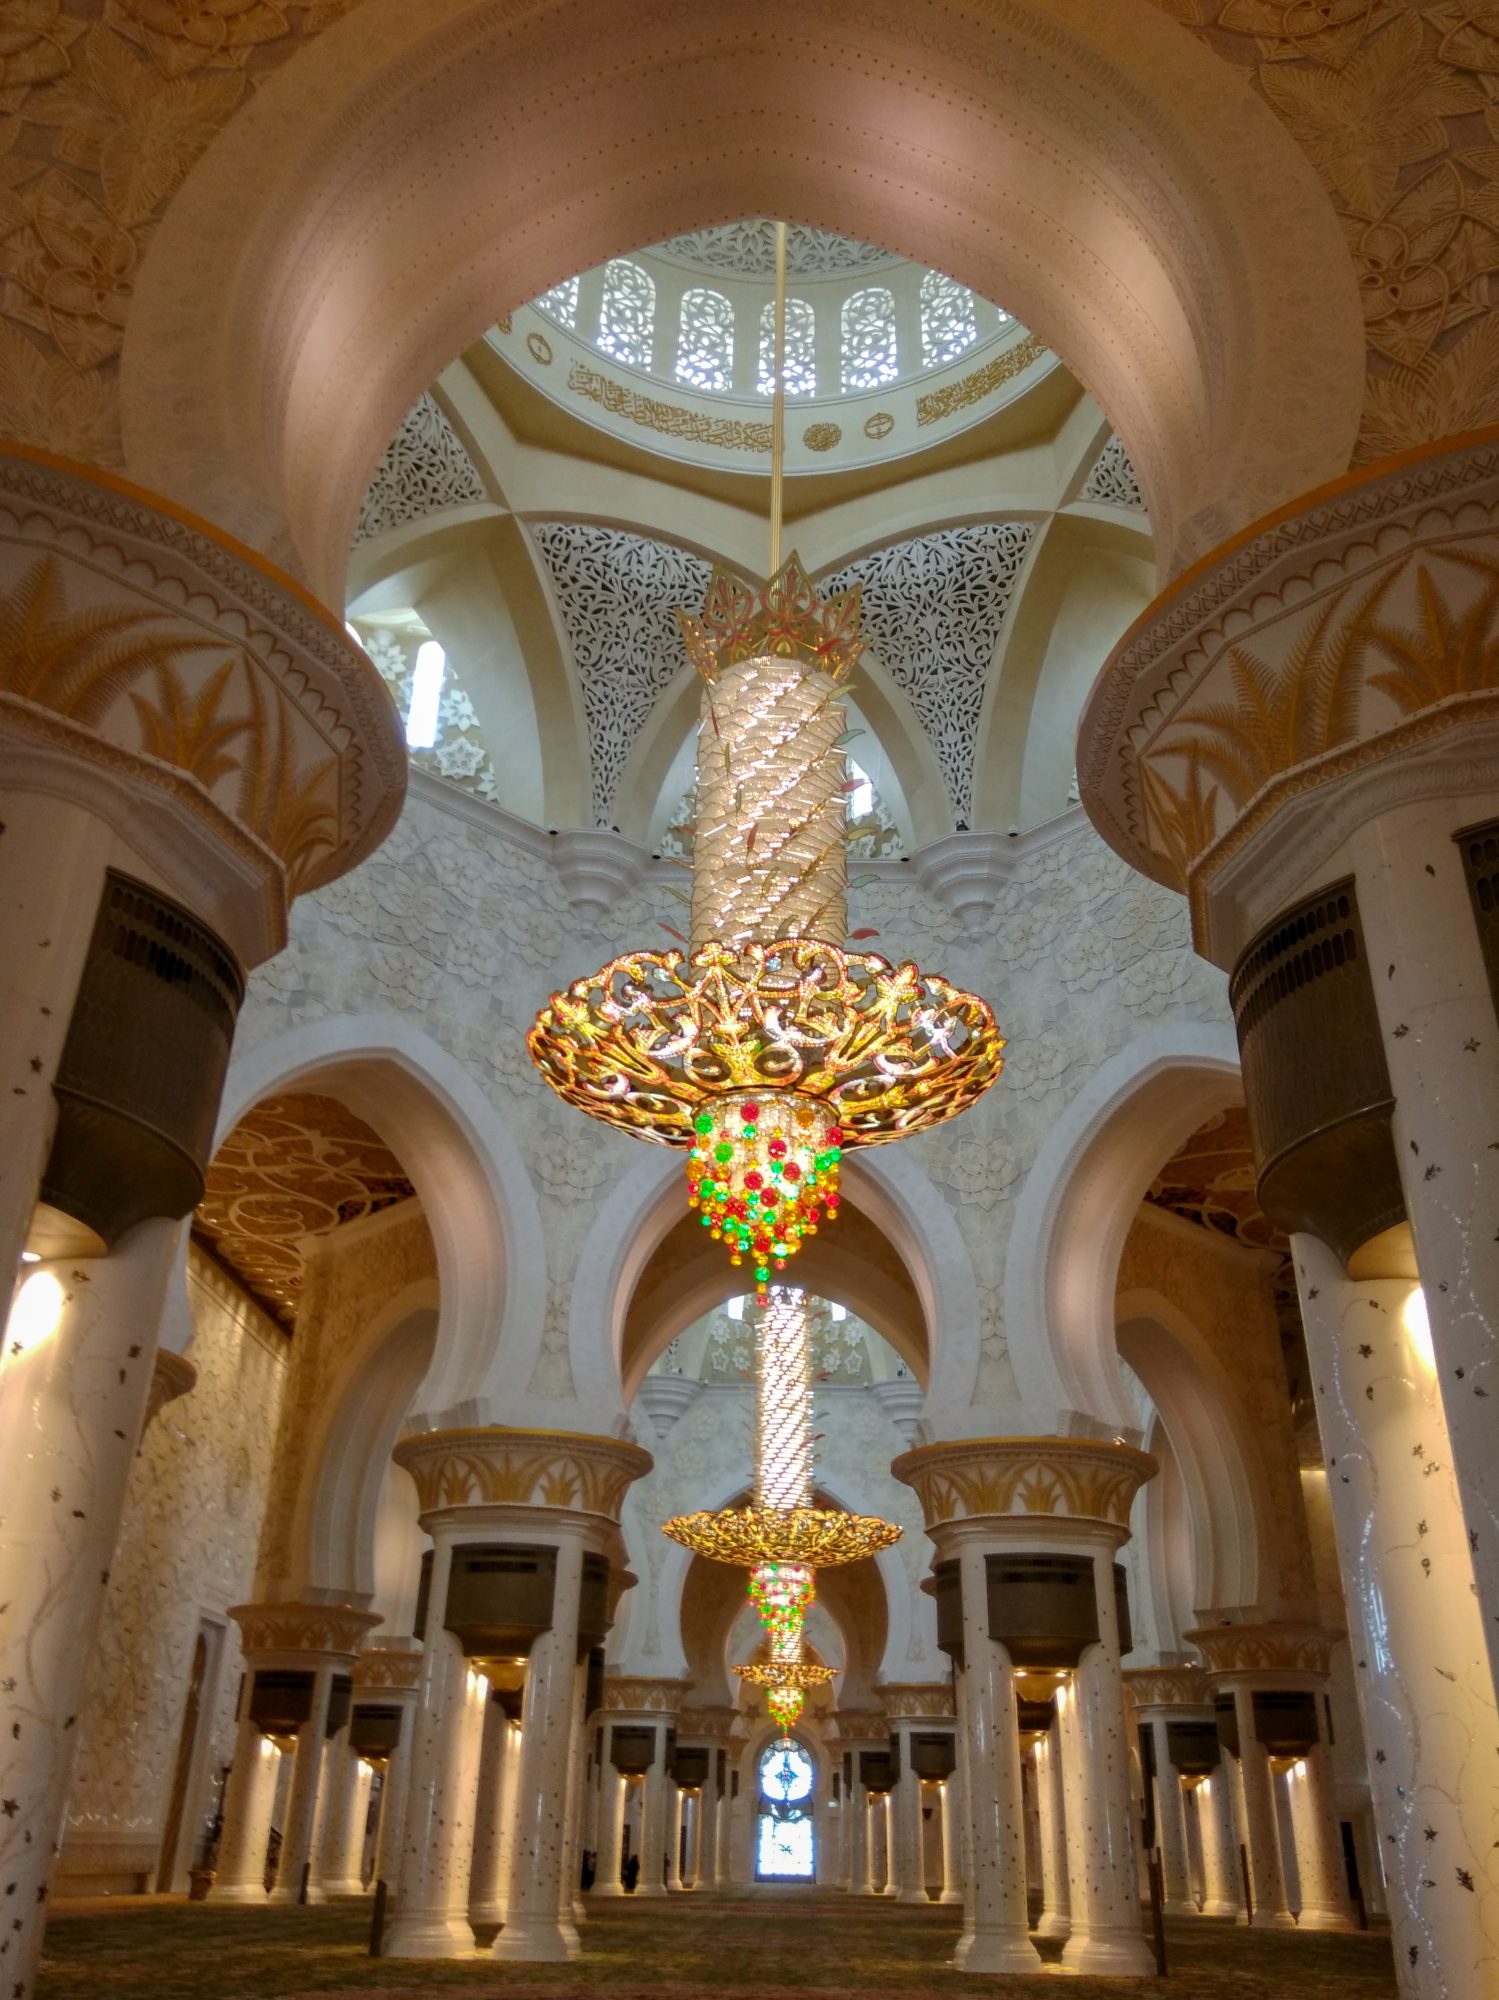 Chandelier in Sheikh Zayed Mosque, Abu Dhabi